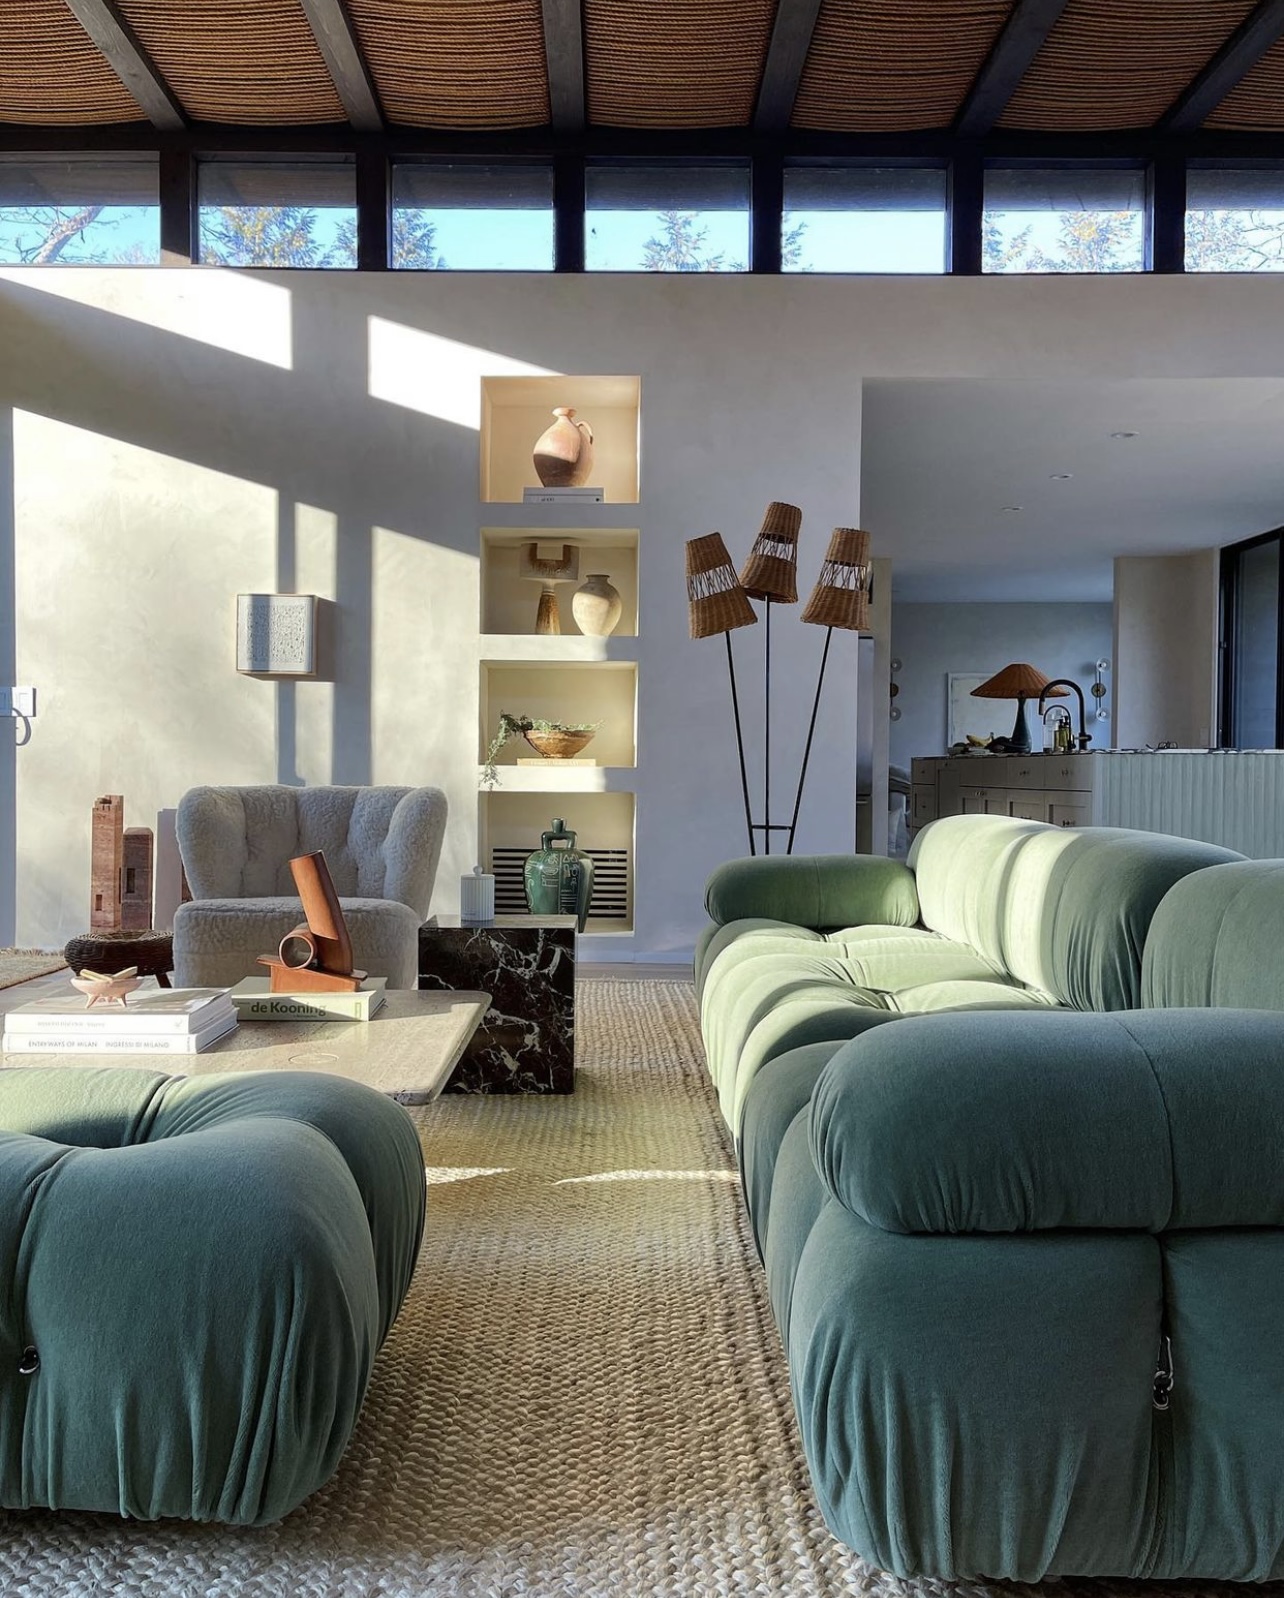 Design History: The Camaleonda Sofa by Mario Bellini